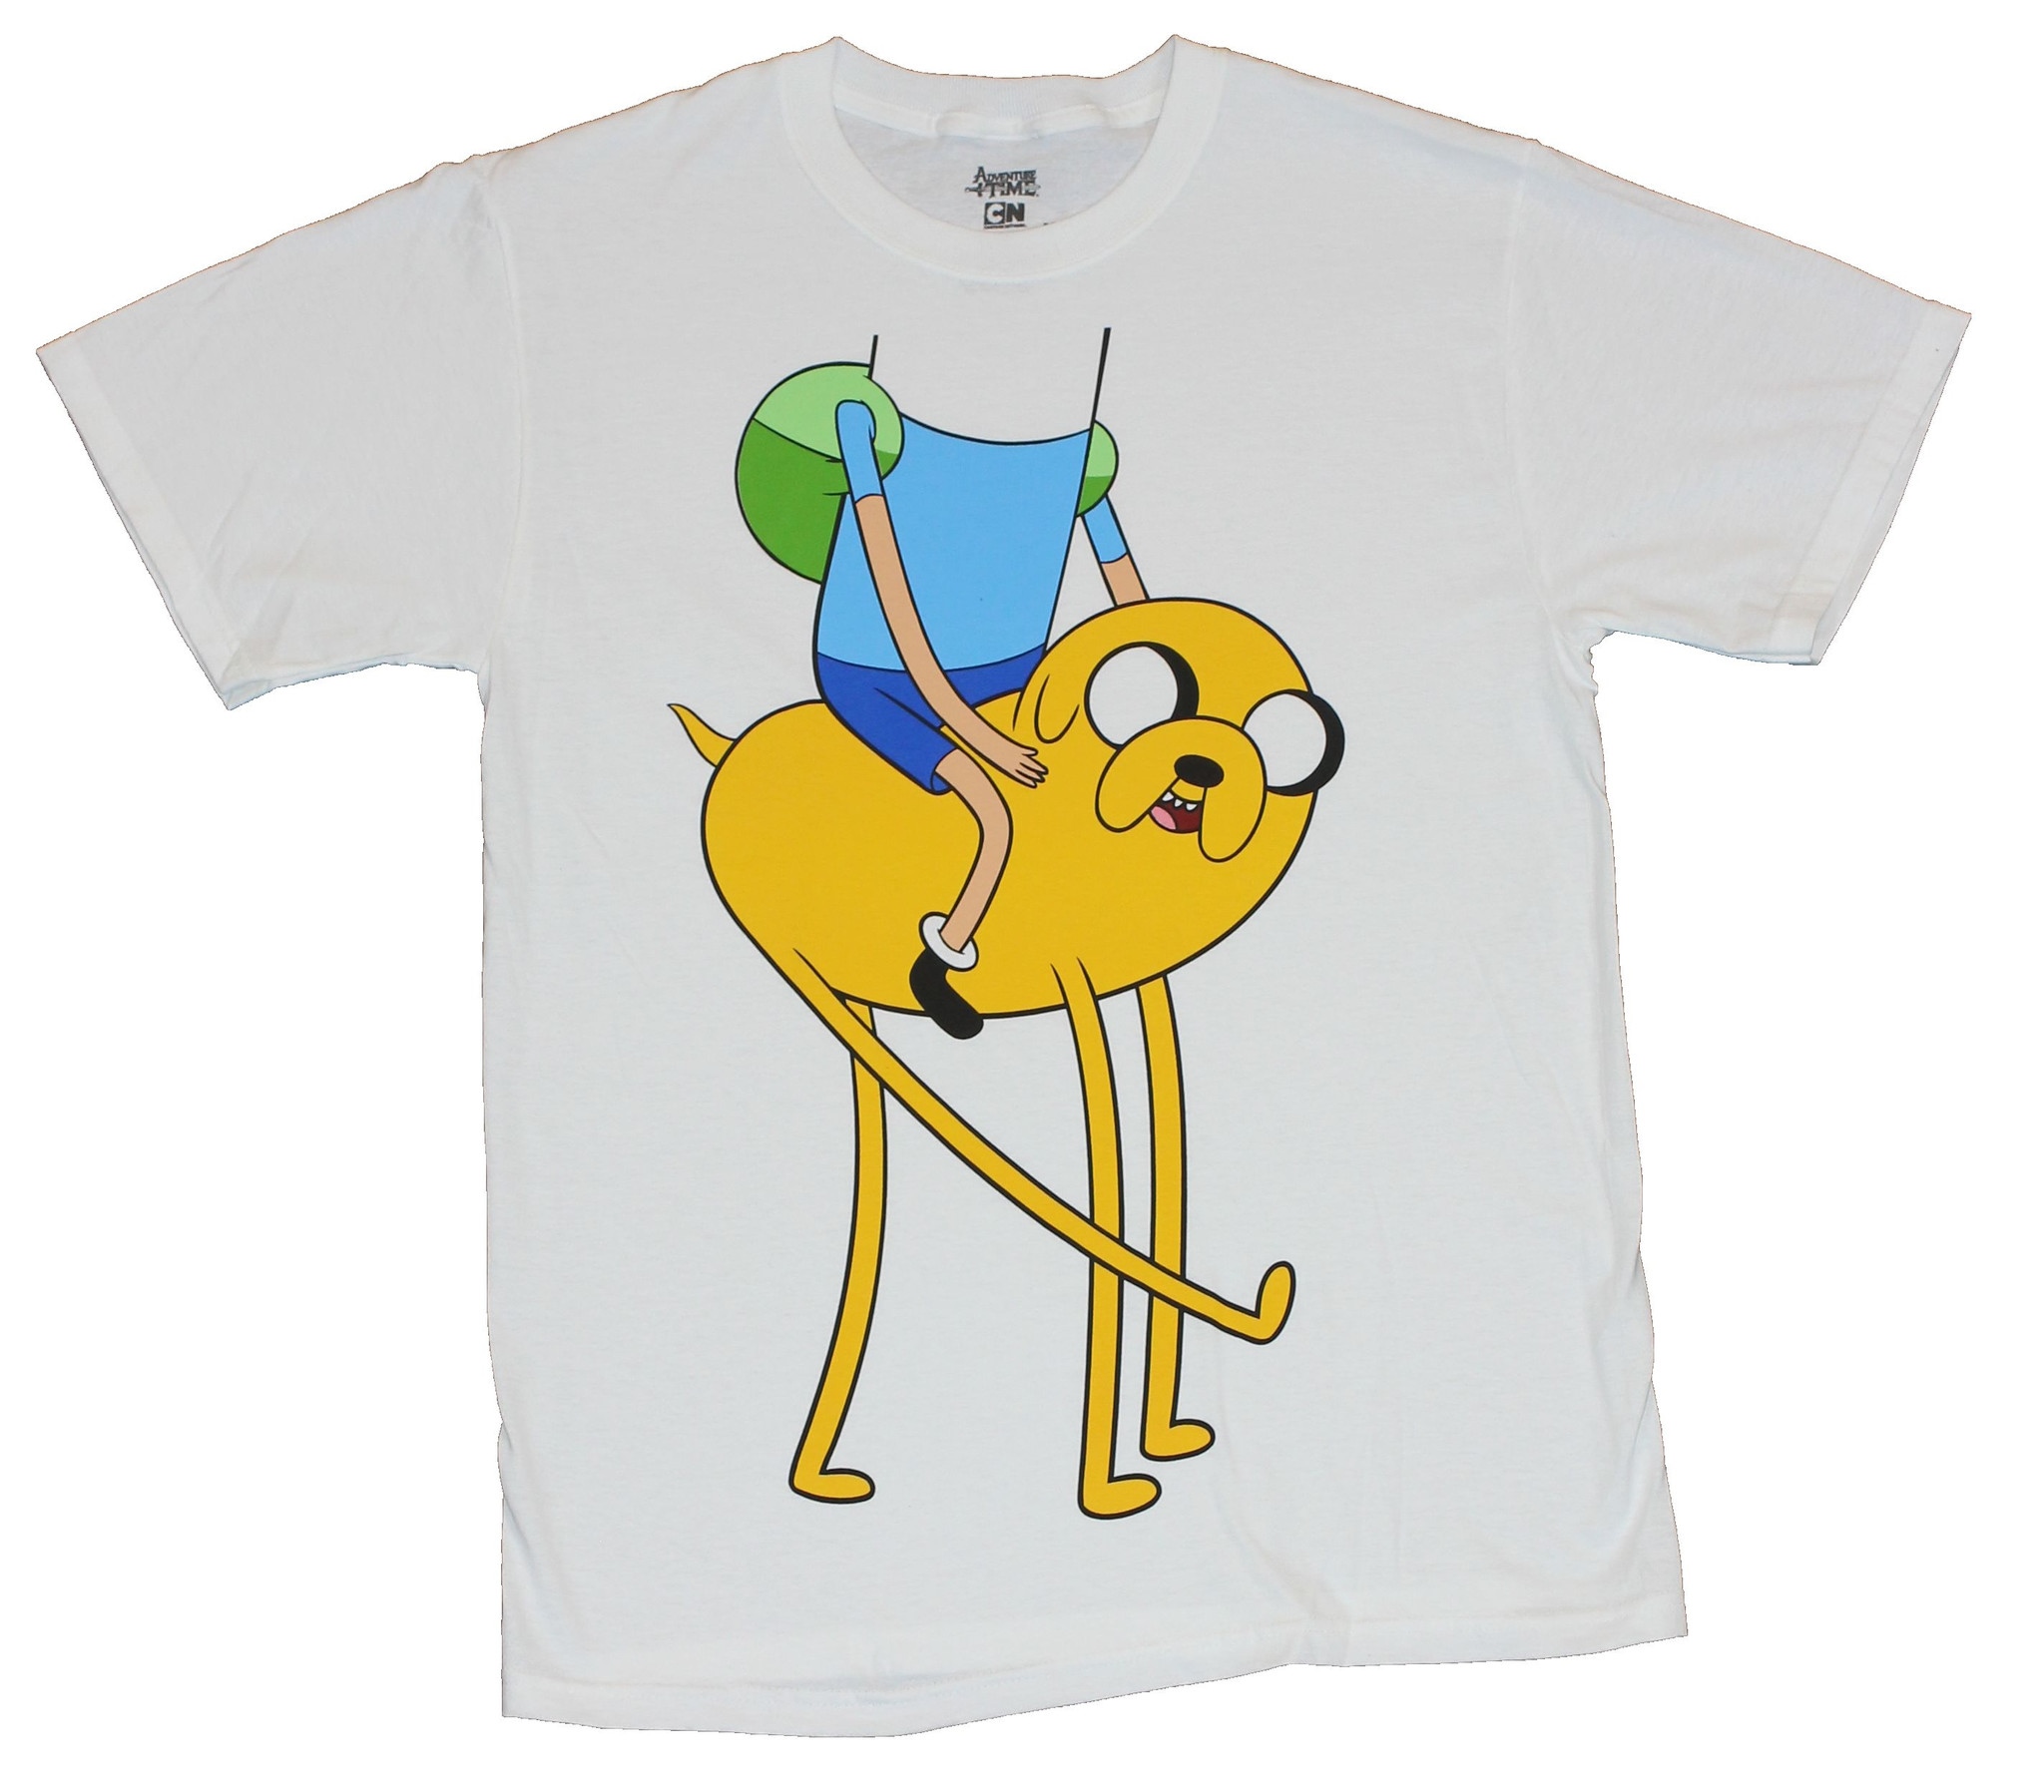 Adventure Time Mens T-Shirt - You are Finn Riding Jake Giiant Image eBay.